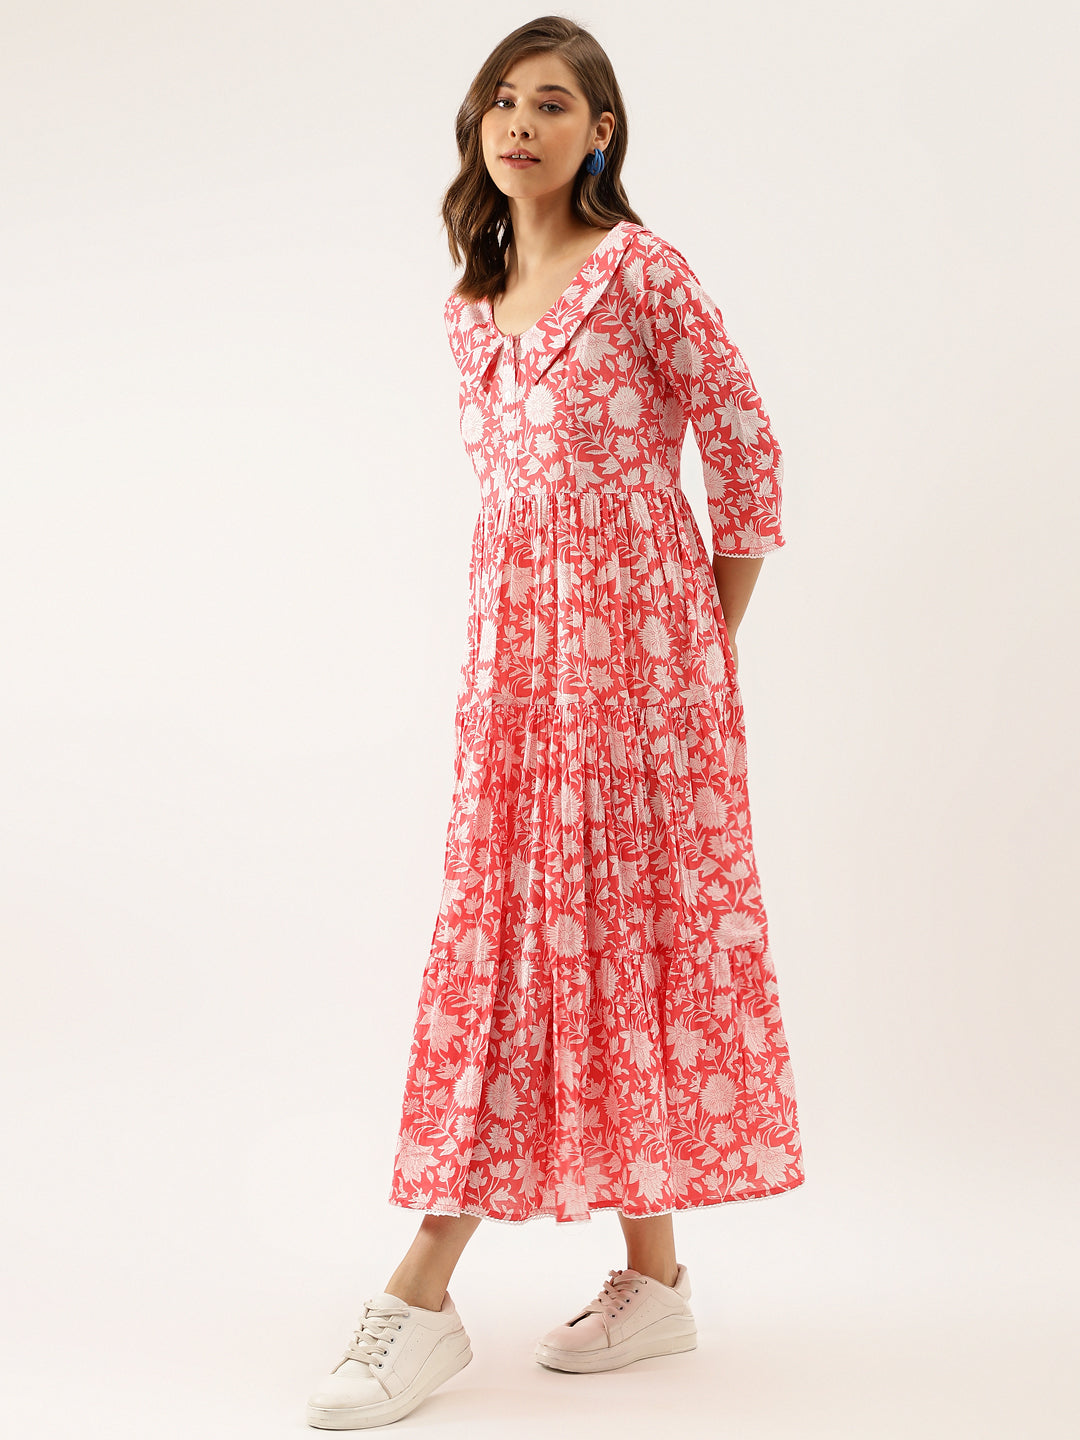 Women's Pink Floral Printed Cotton Ethnic Dress - Noz2Toz